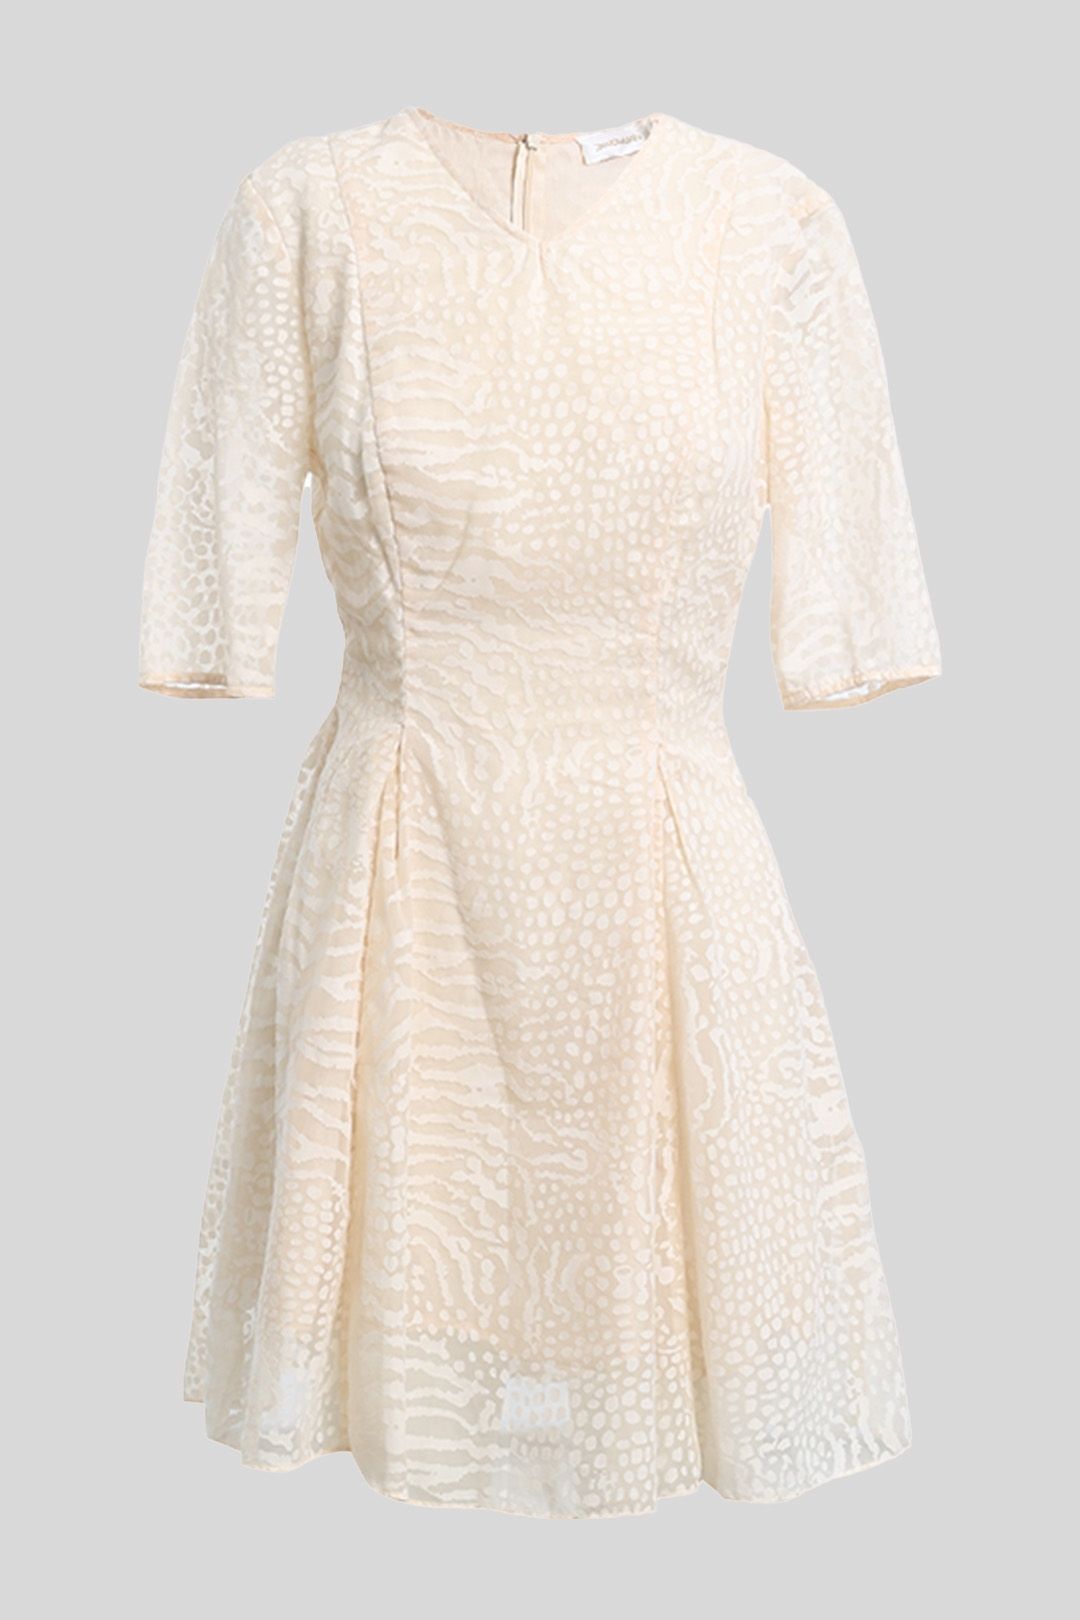 Zimmermann - Cream Short Sleeve Mini Dress